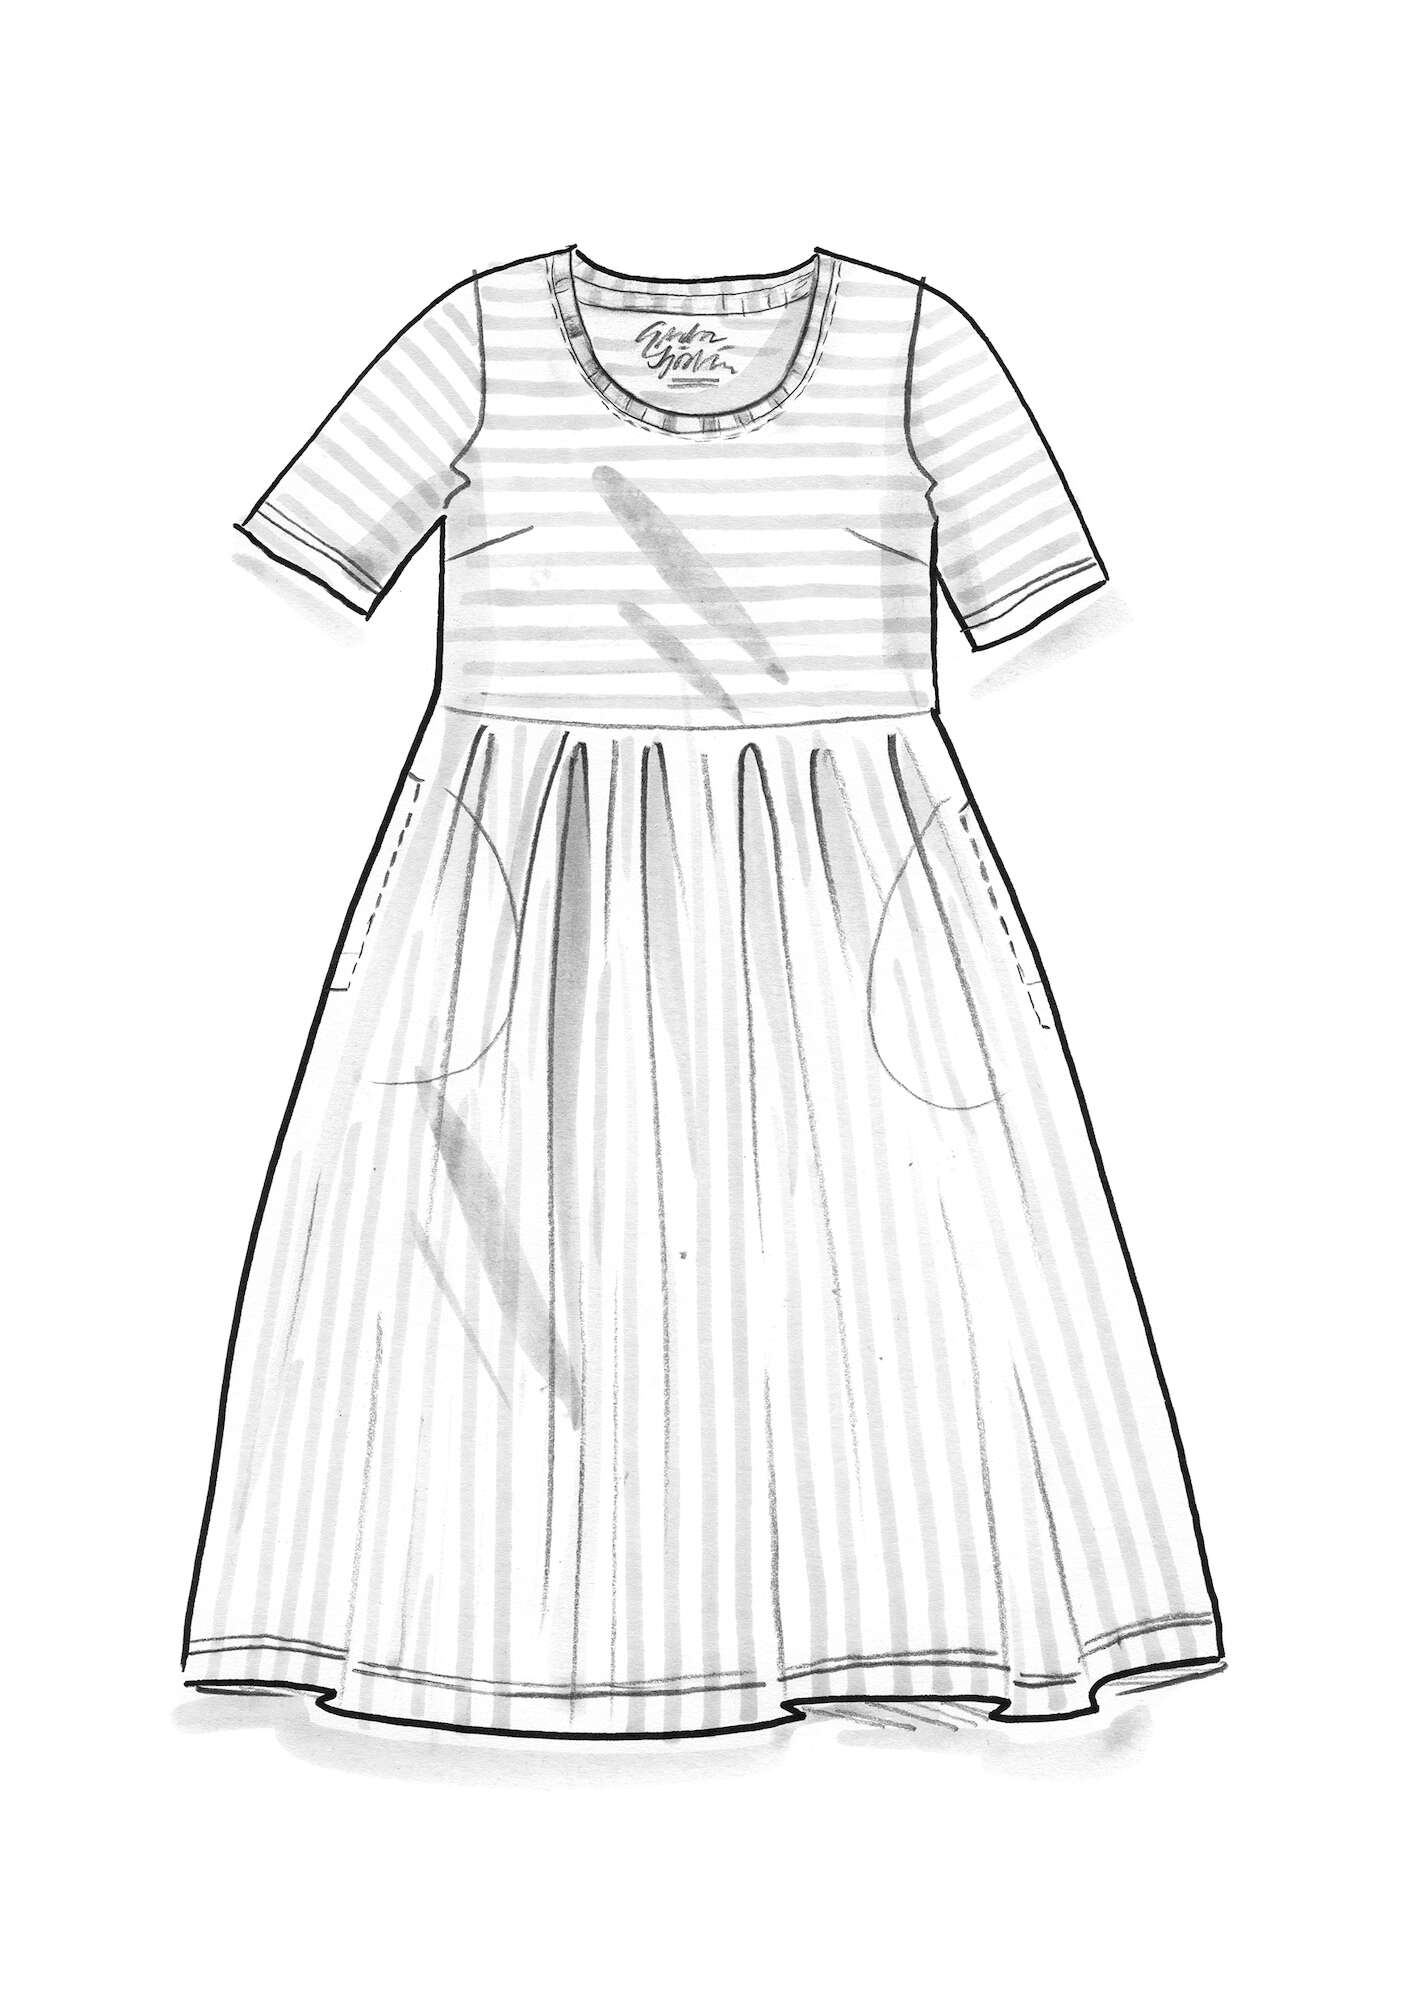 Striped jersey dress in organic cotton unbleached/light potato